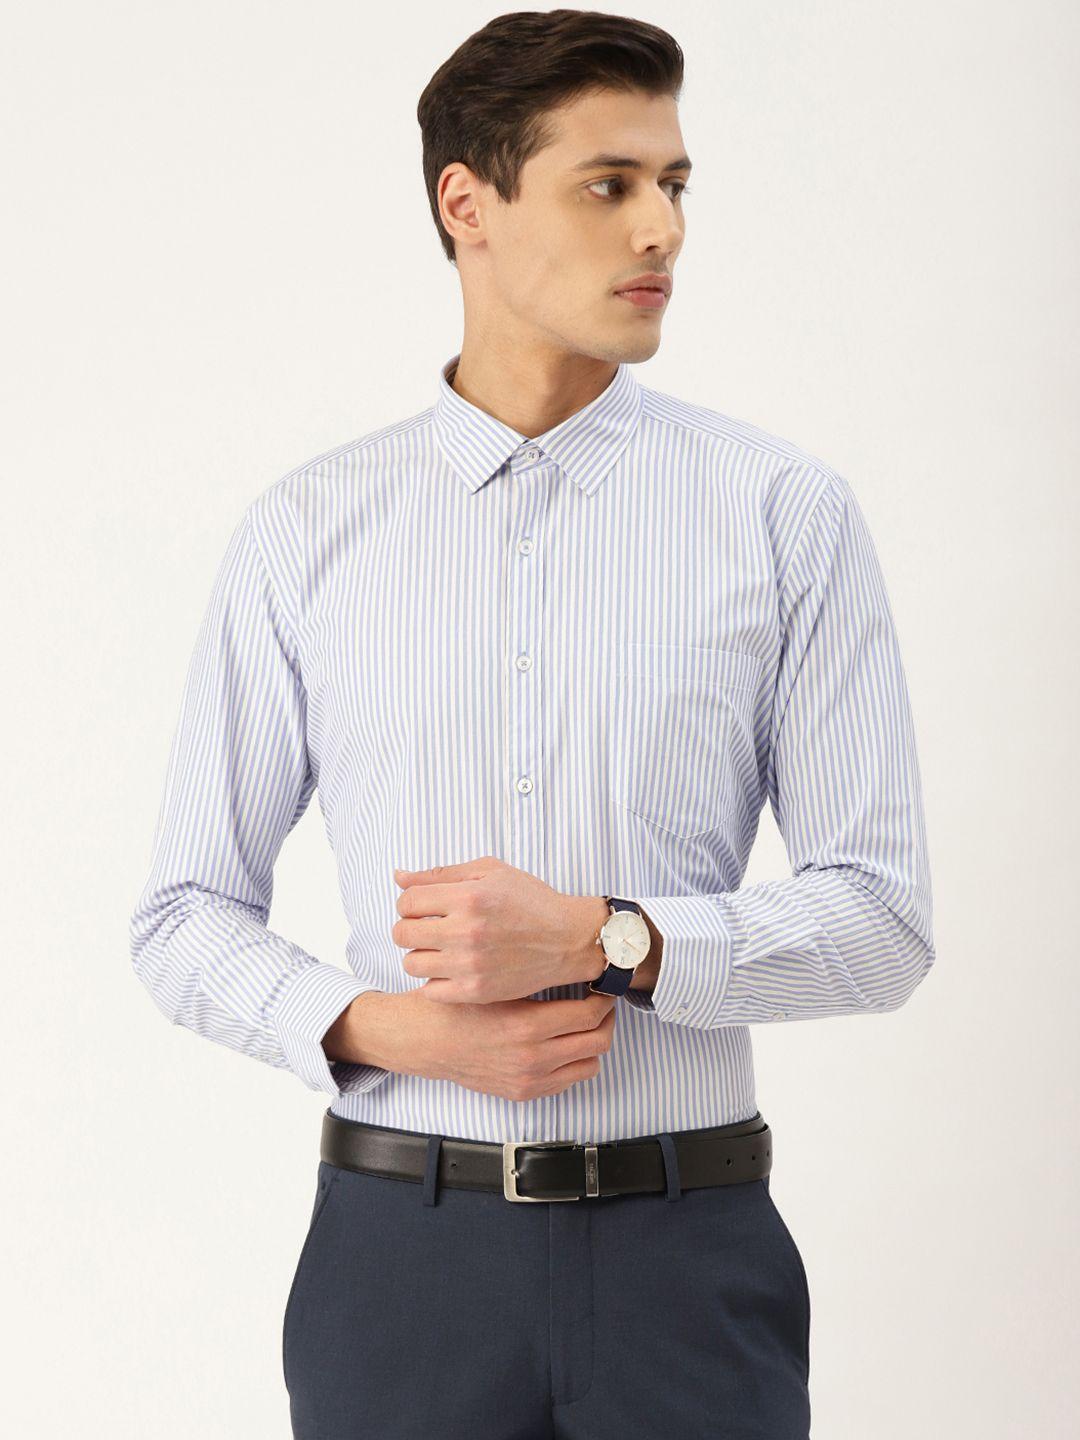 style quotient men blue & white striped formal shirt